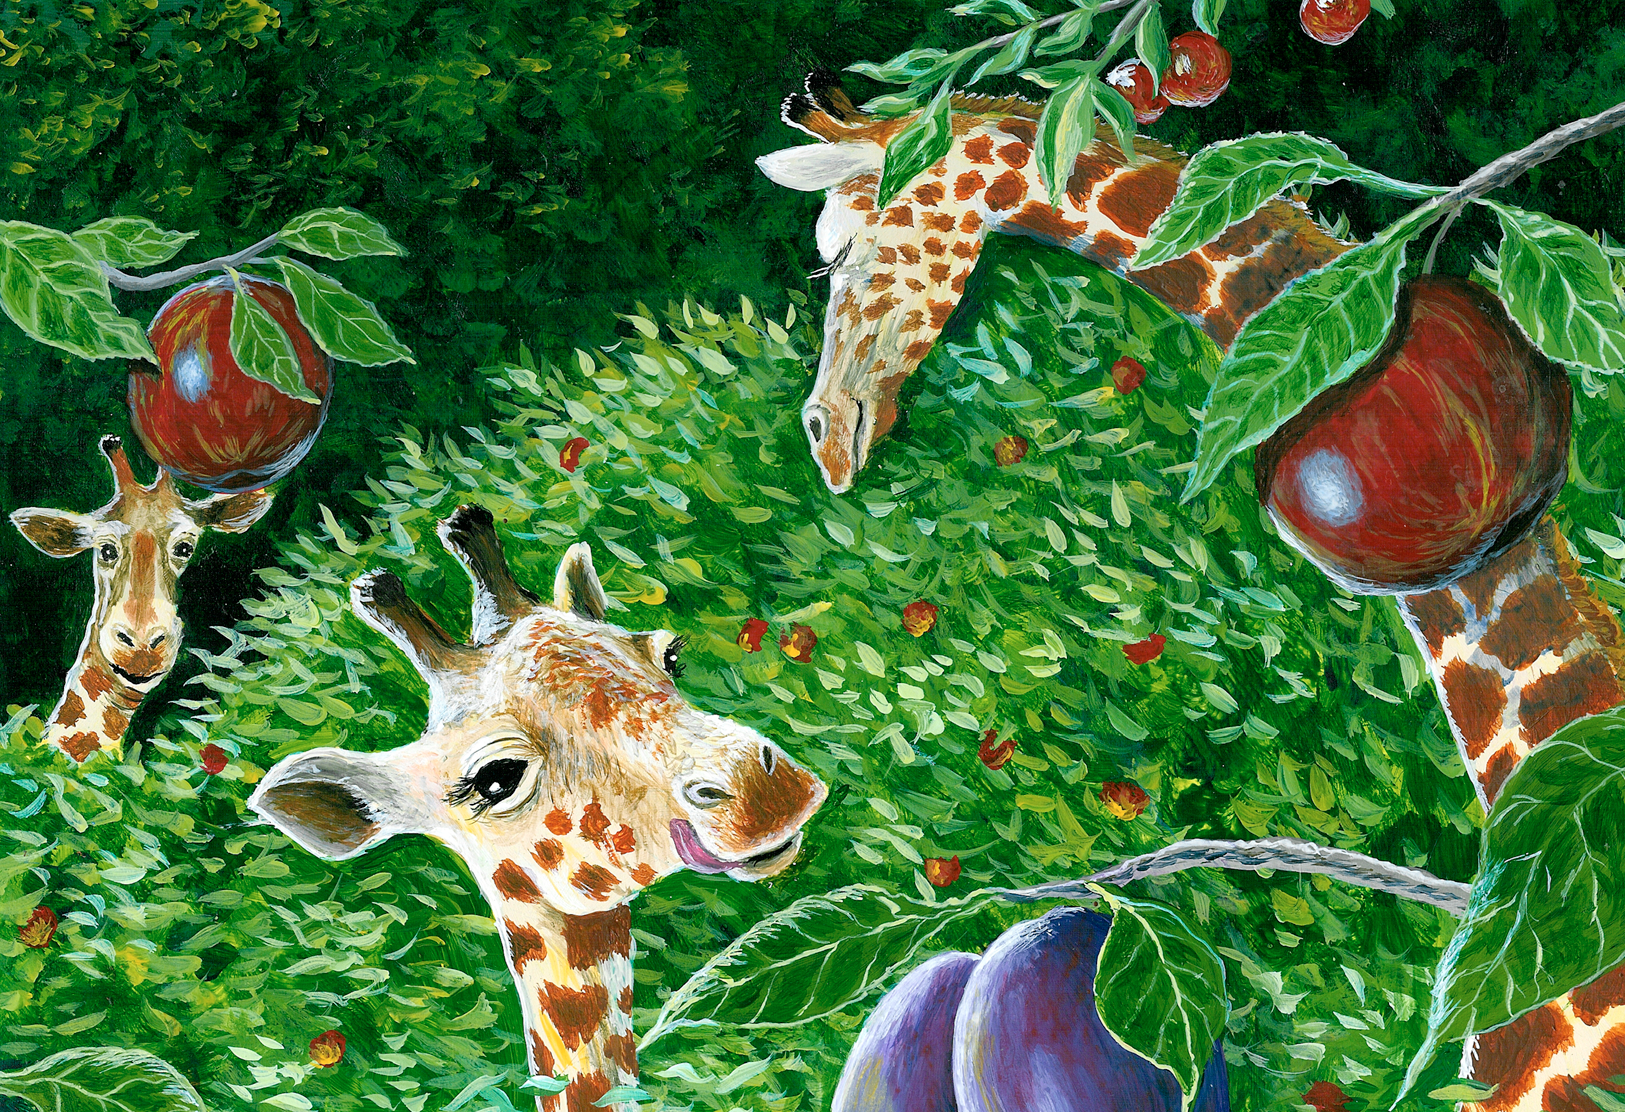 Giraffes in orchard